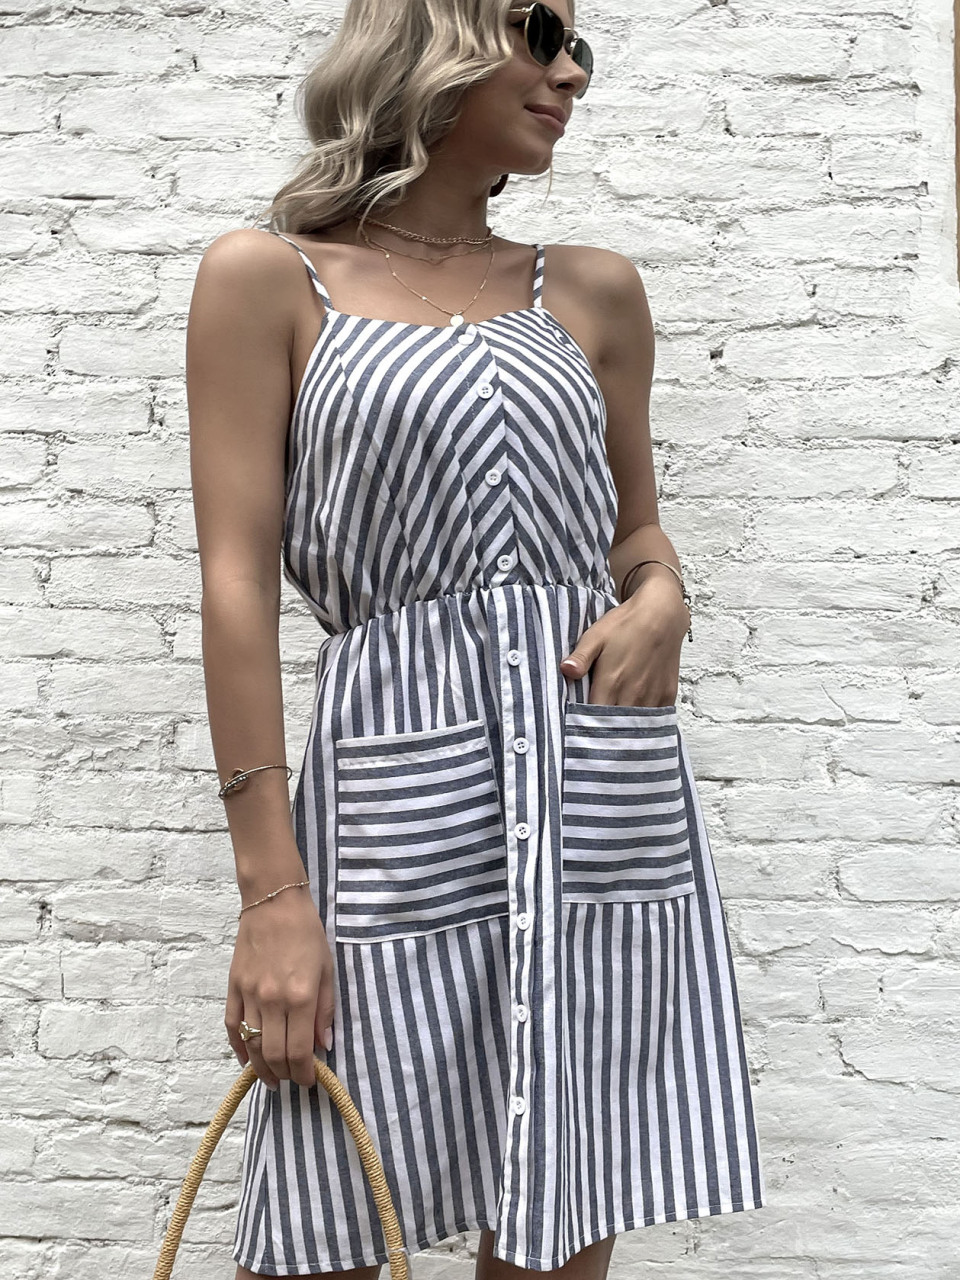 Women's Slip Dress Grey Striped Cotton Linen Dress